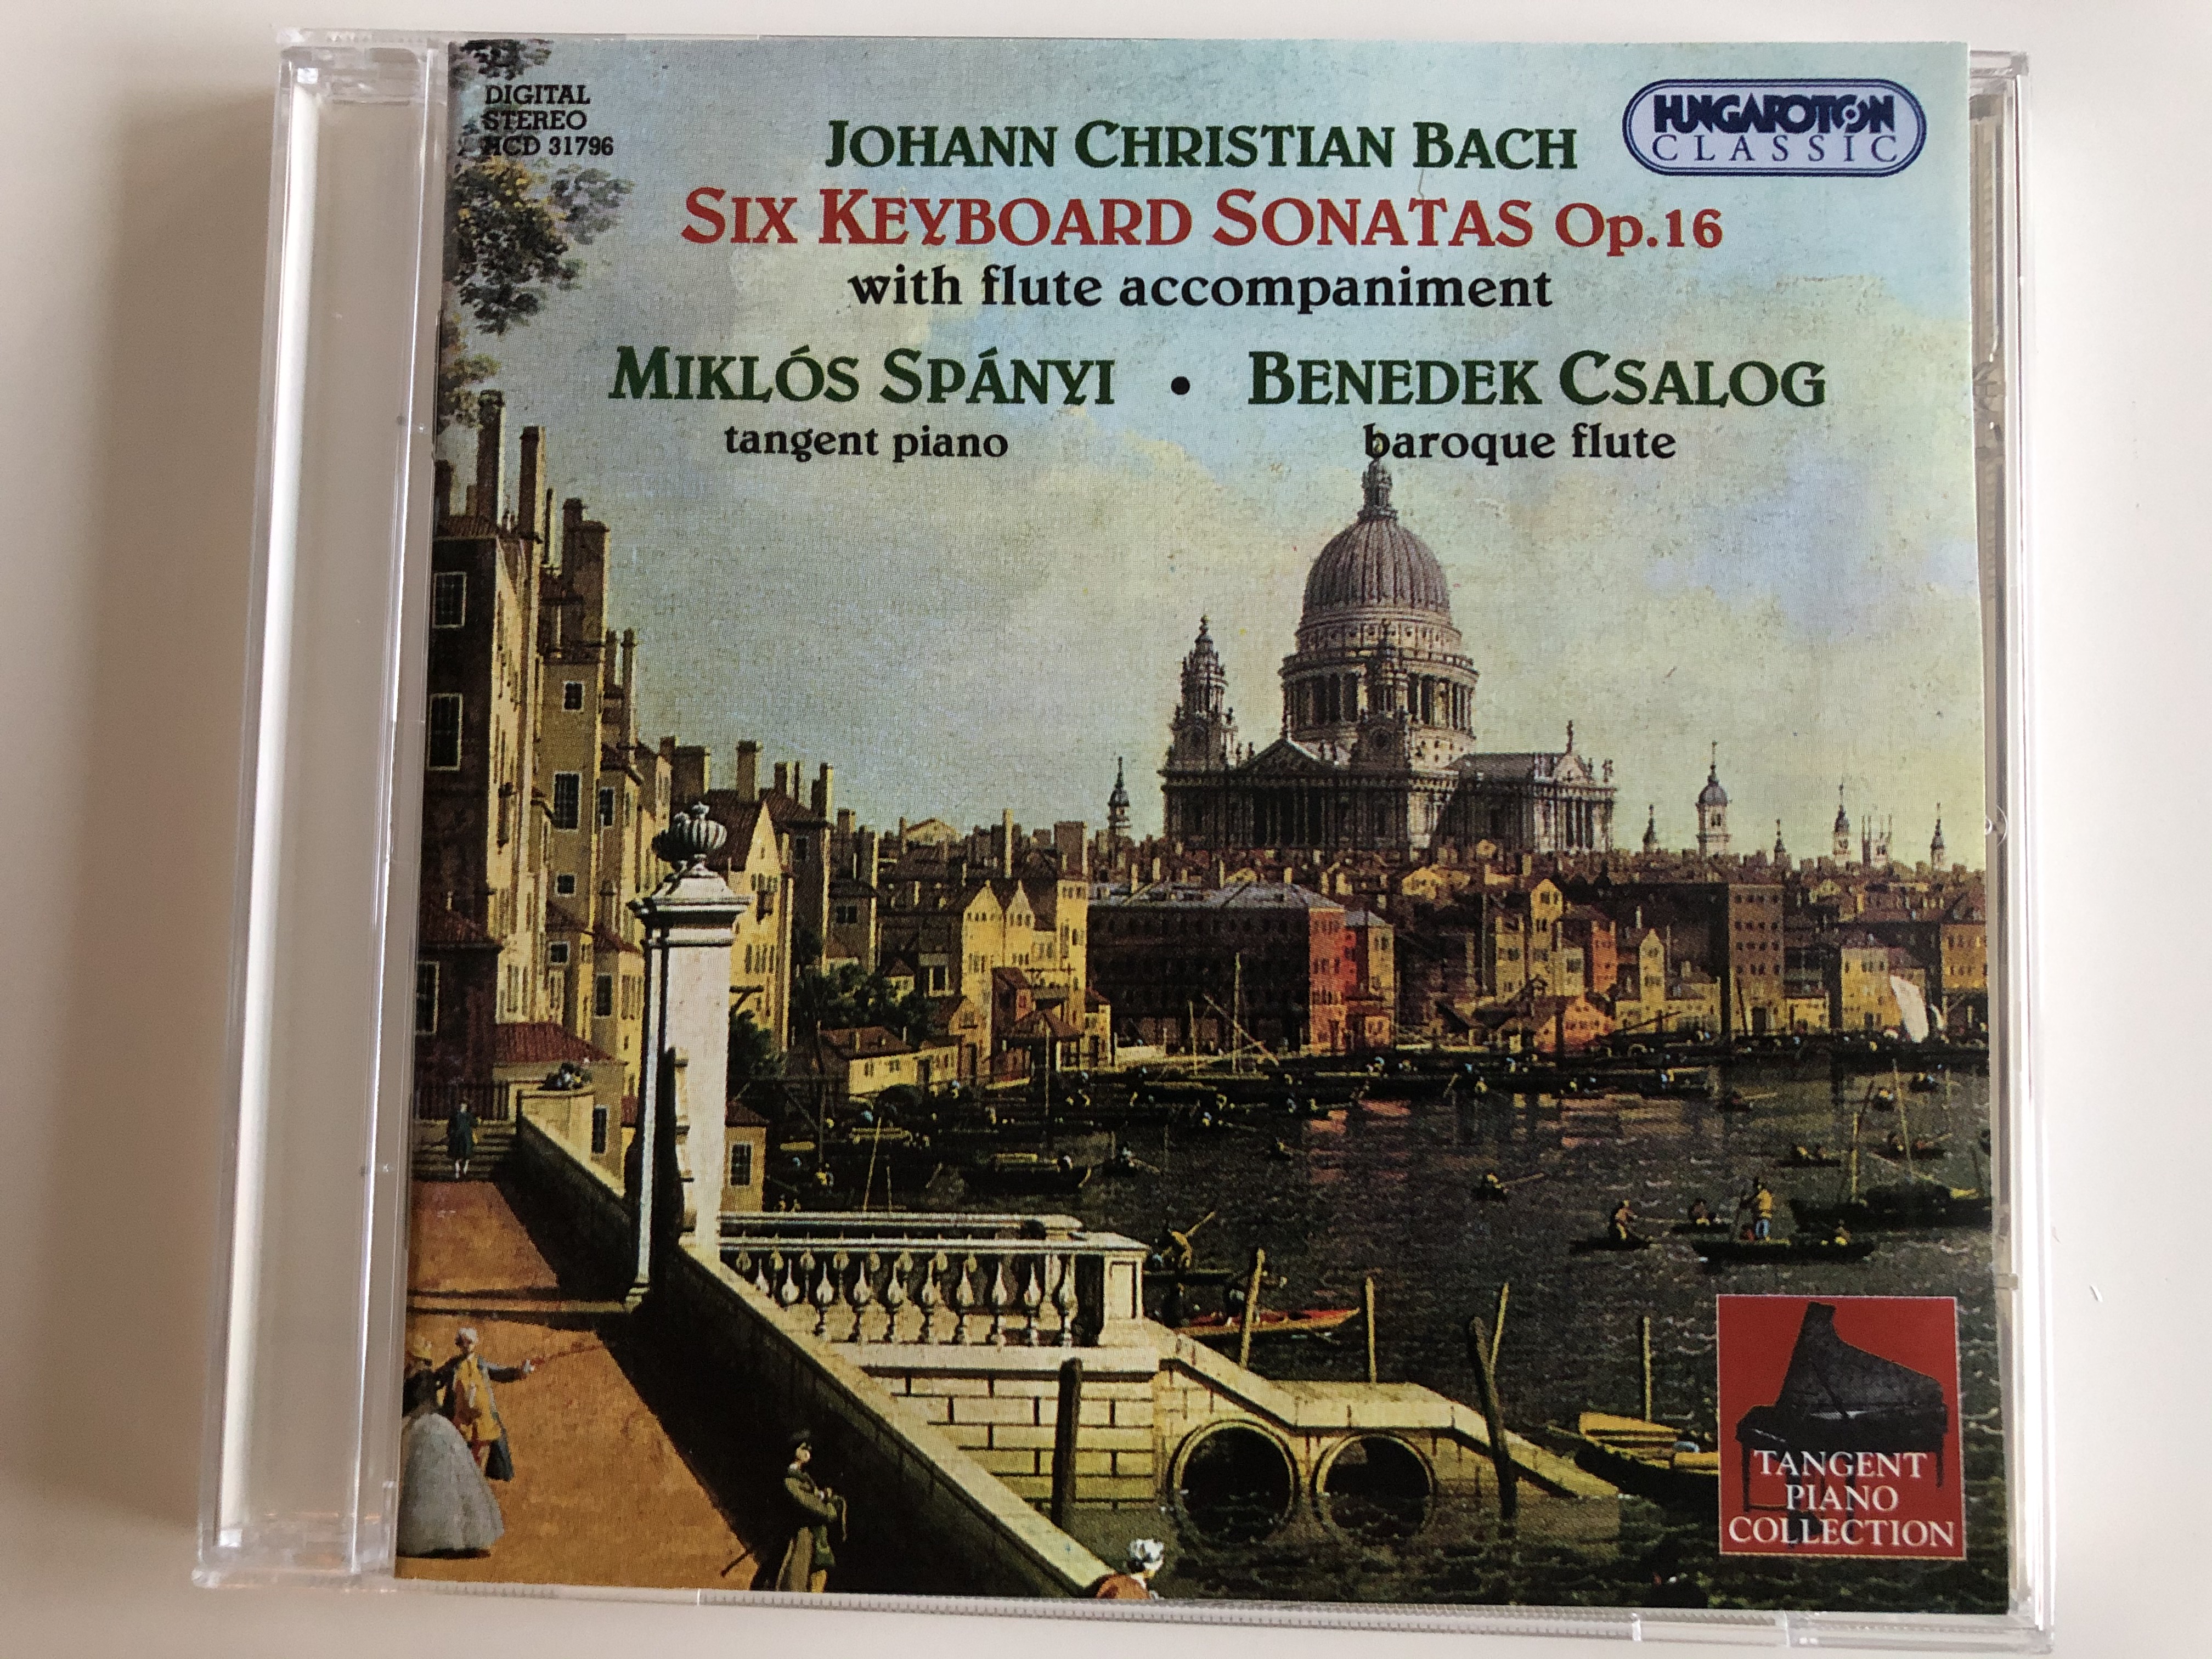 johann-christian-bach-six-keyboard-sonatas-op.-16-with-flute-accompaniment-miklos-spanyi-tangent-piano-benedek-csalog-baroque-flute-hungaroton-classic-audio-cd-1999-stereo-hcd-31796-1-.jpg